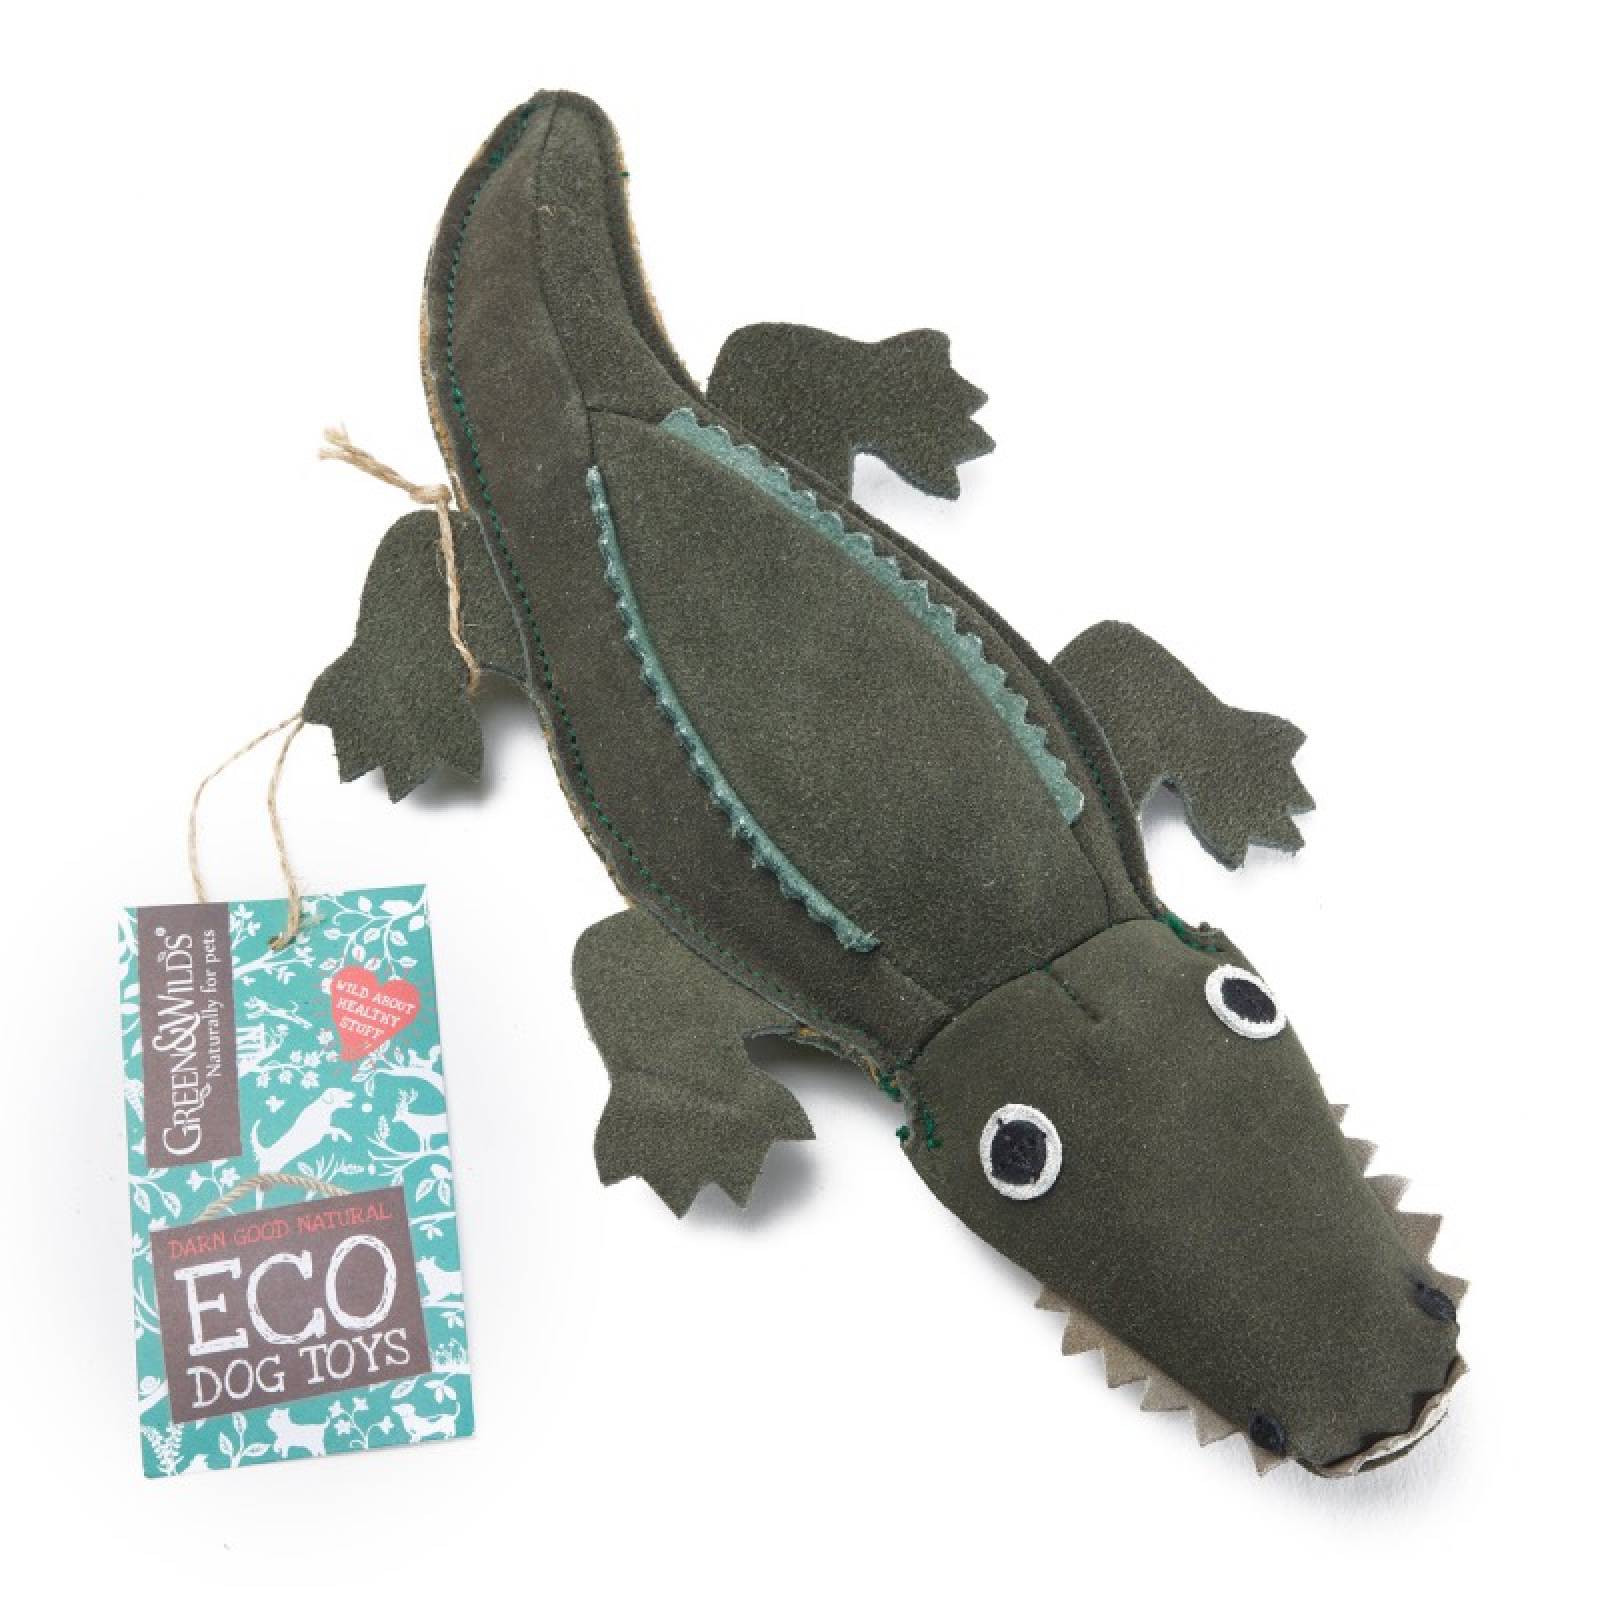 Colin The Crocodile Eco Dog Toy